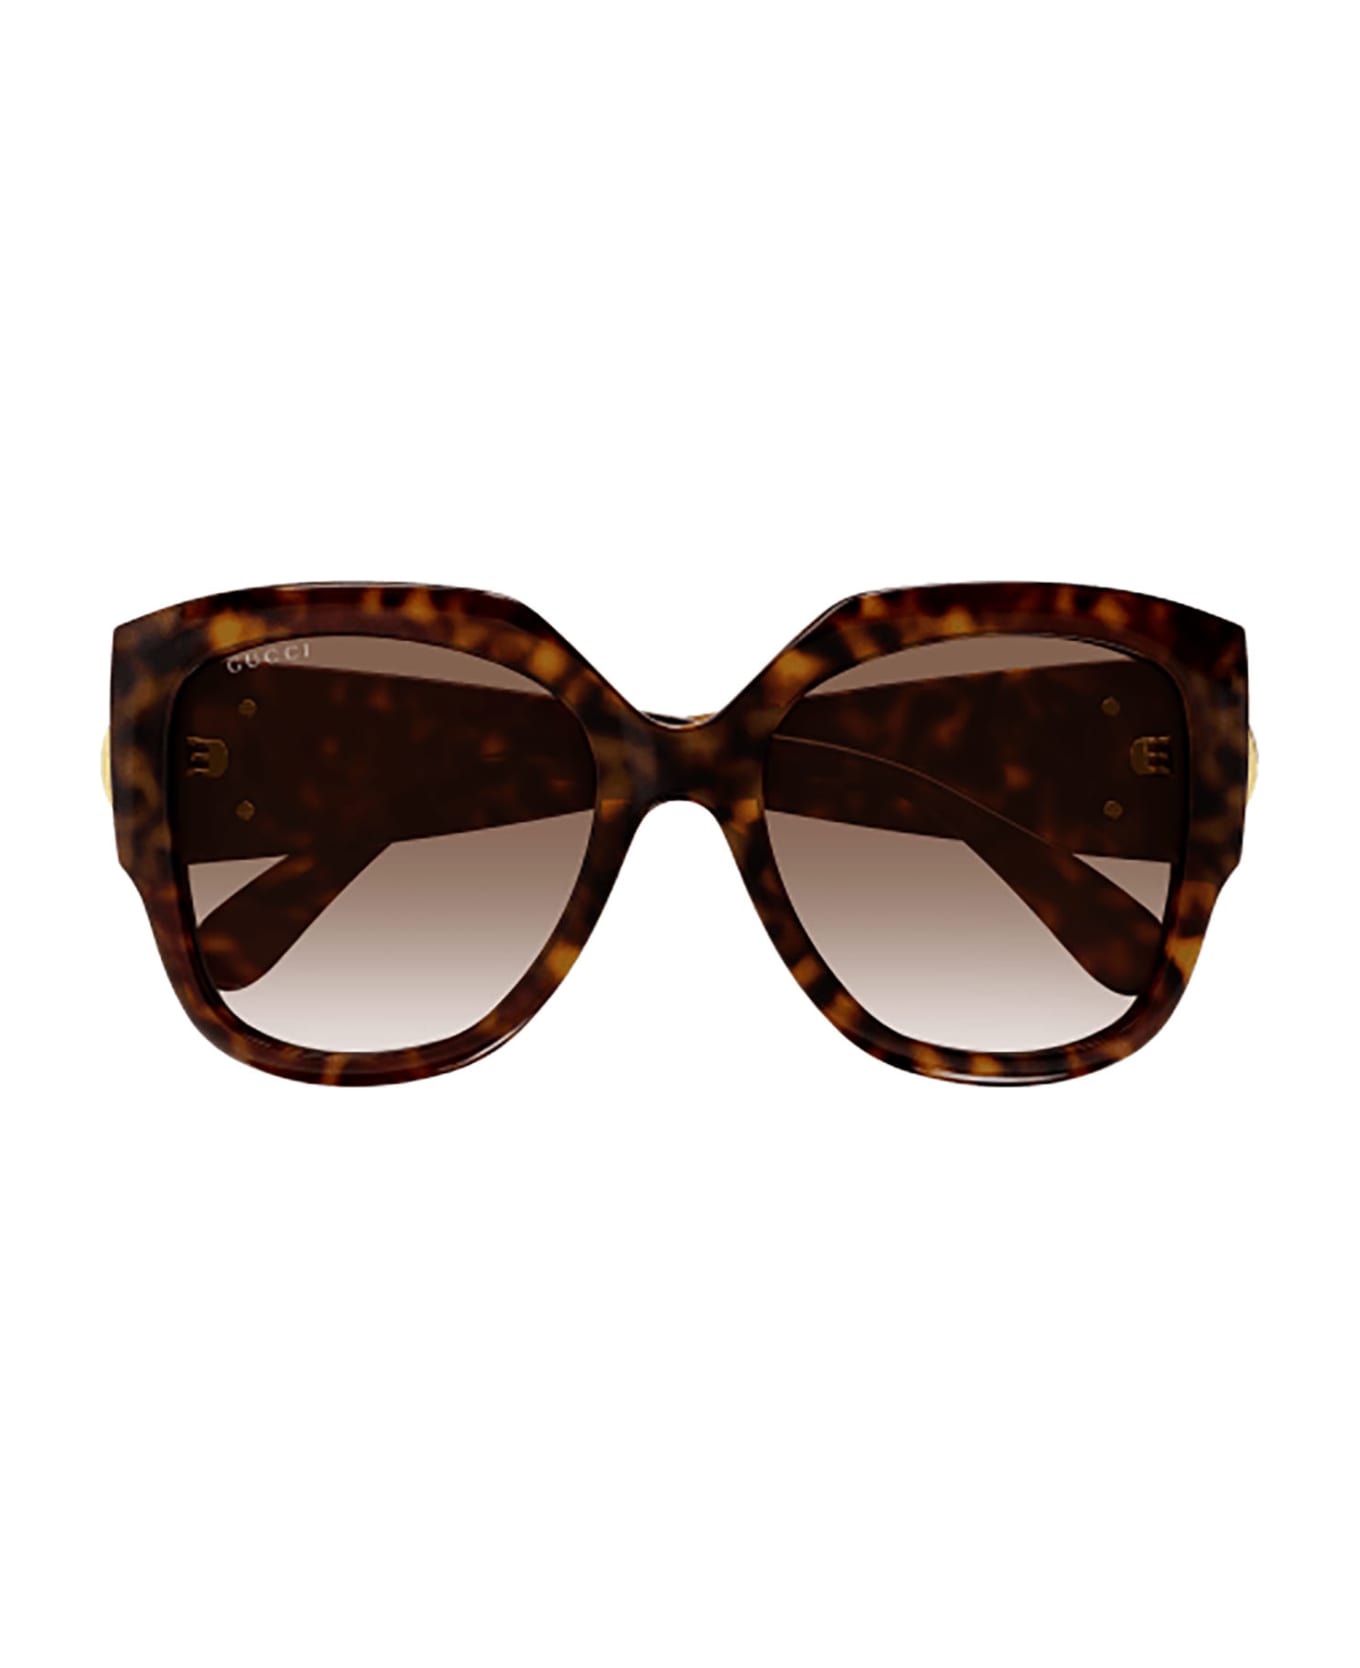 Gucci Eyewear GG1407S Sunglasses - Havana Havana Brown